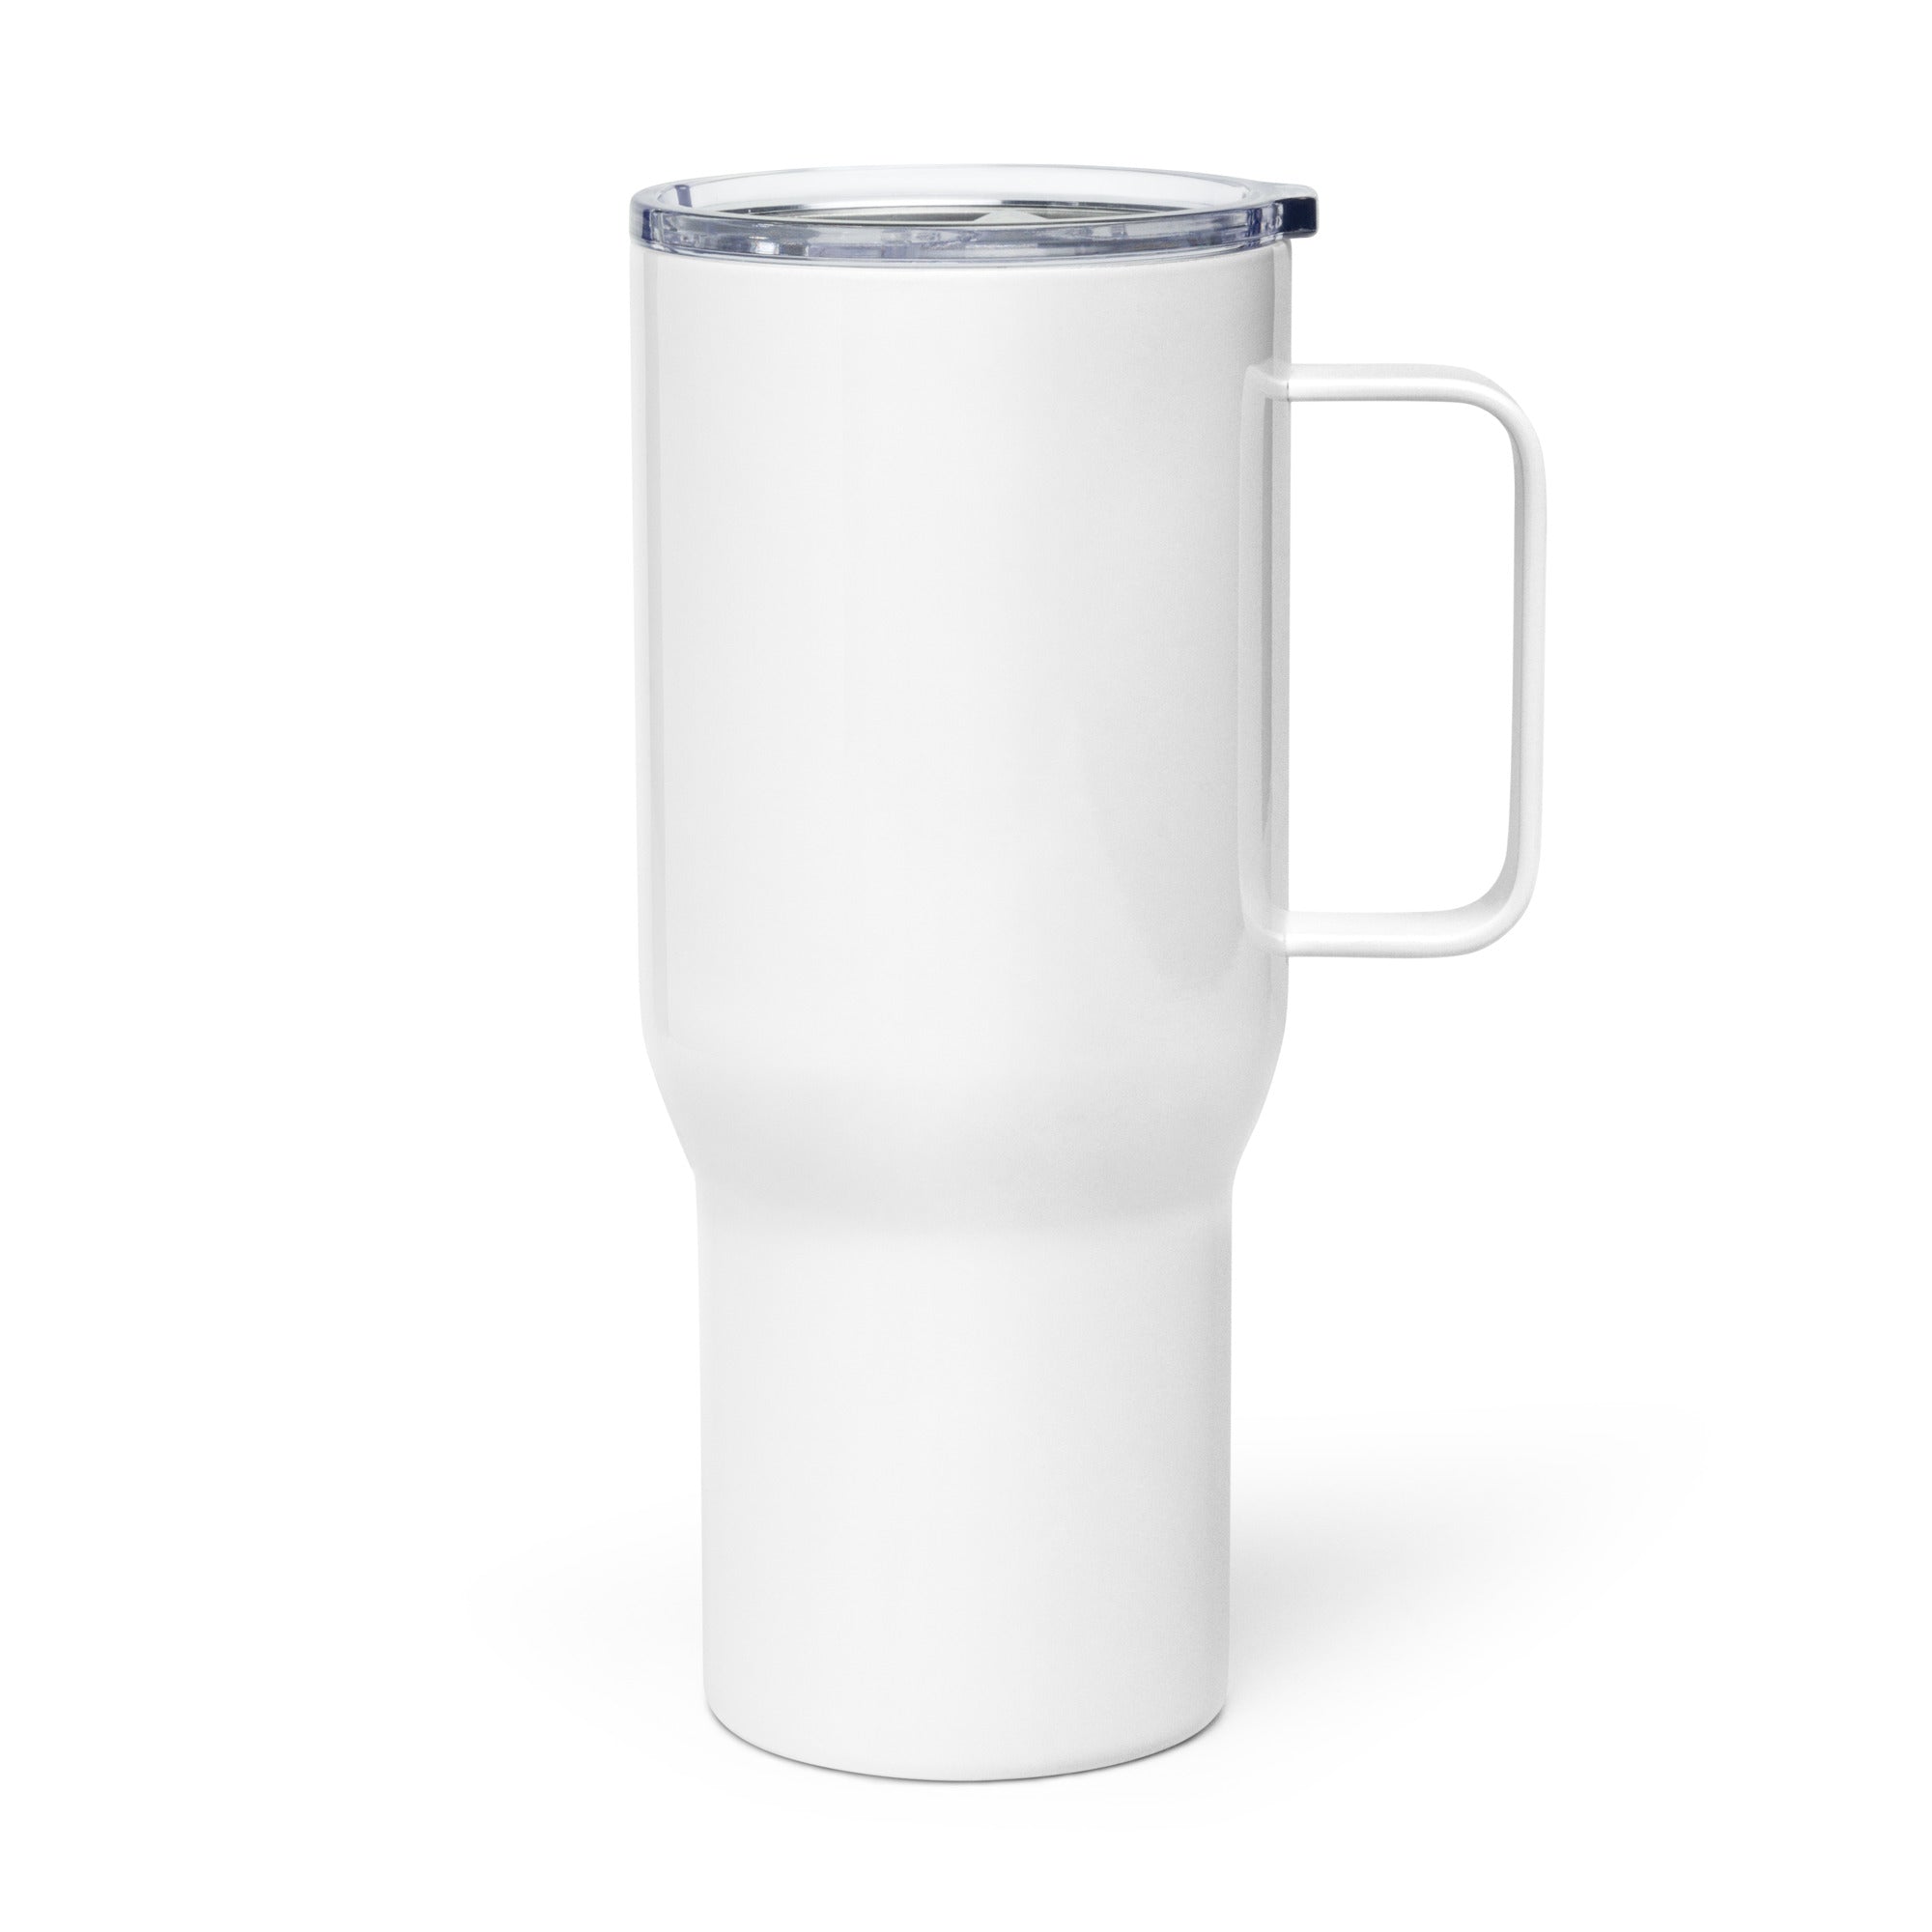 N-S Travel mug with a handle (GIRLS LOGO)